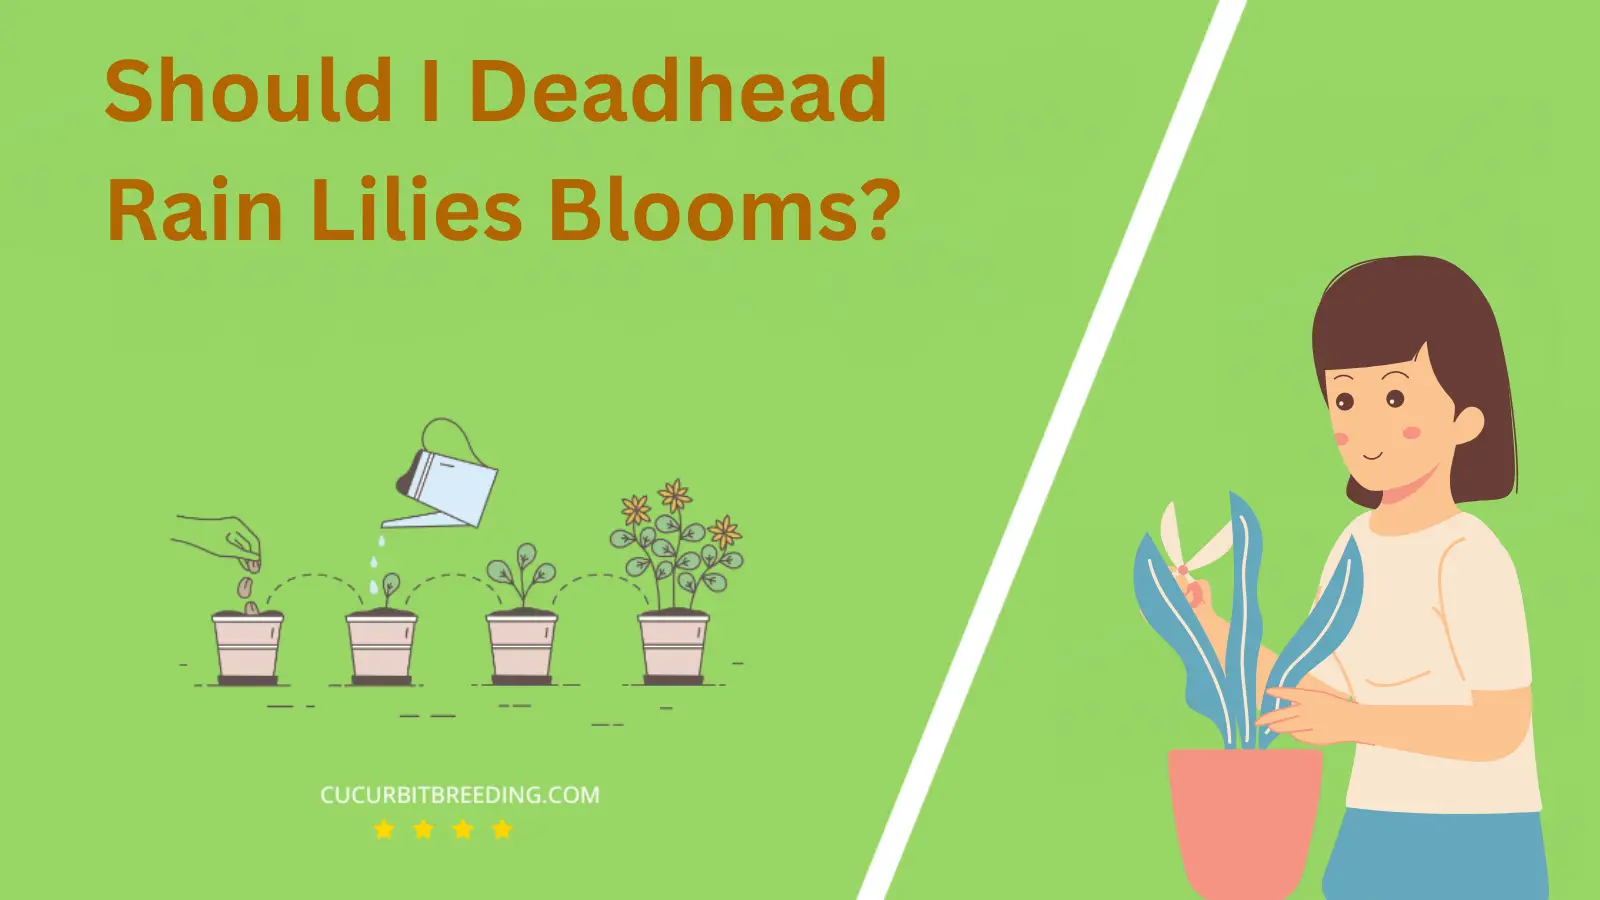 Should I Deadhead Rain Lilies Blooms?